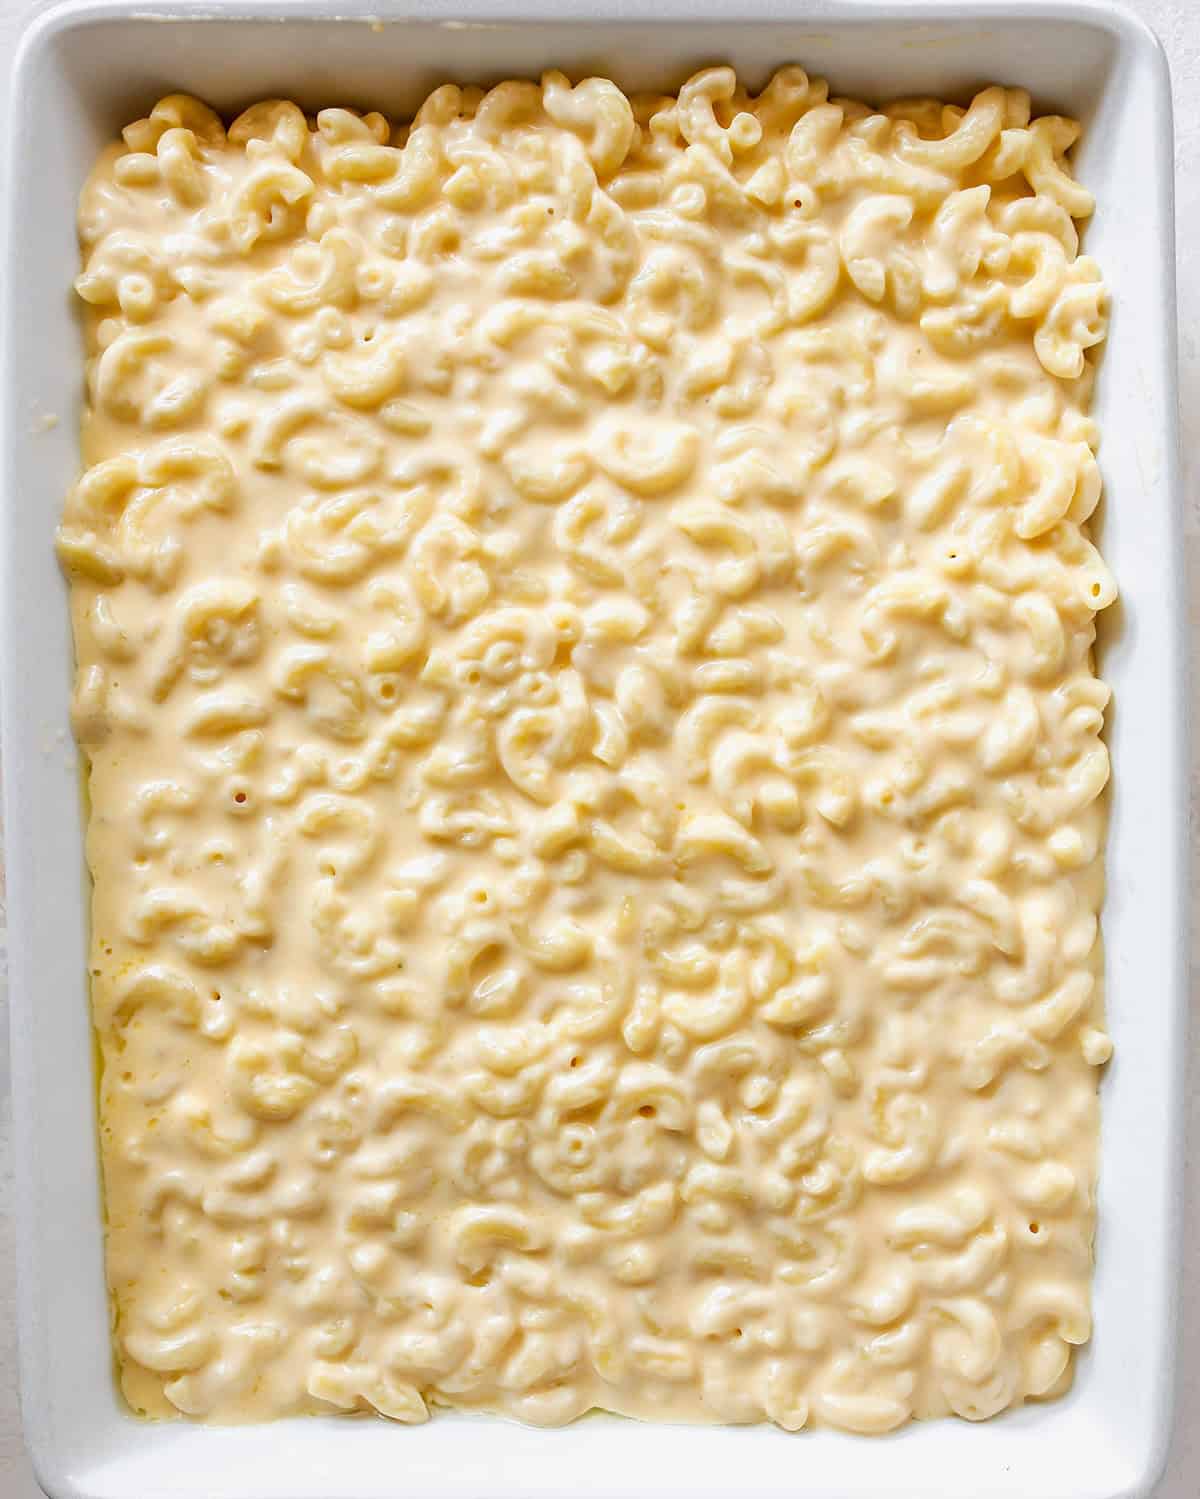 Greek Yogurt Mac & Cheese in a baking dish before baking